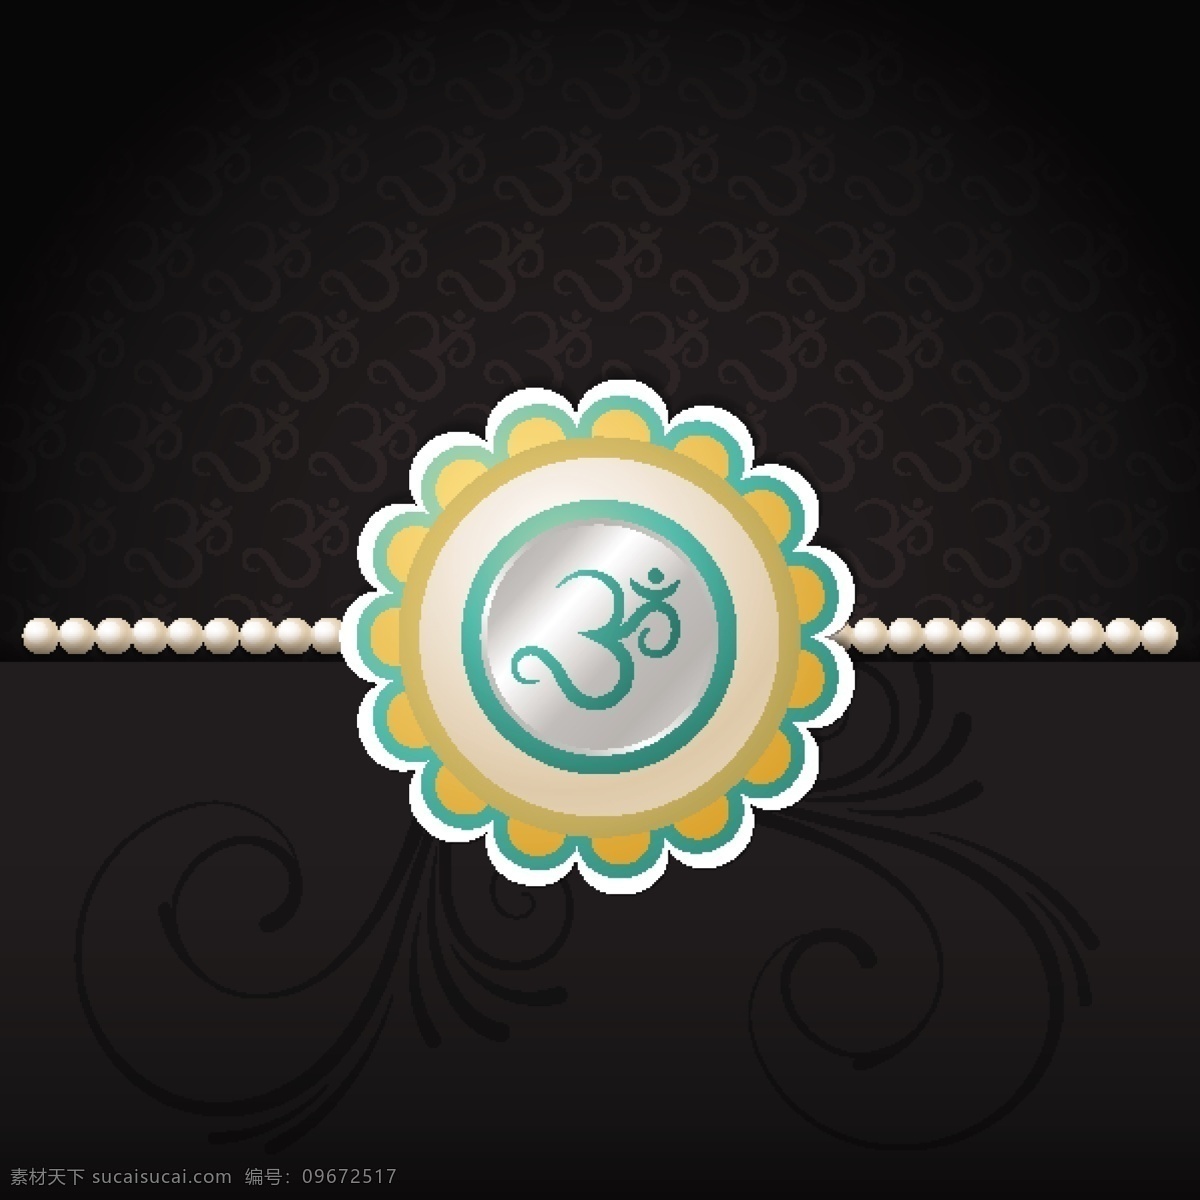 rakhi 手镯 棕色 背景 卡片 印度 庆祝 宗教 节日 装饰 文化 线 问候 传统 棕色背景 宗教信仰 印度教 关系 姐妹 黑色